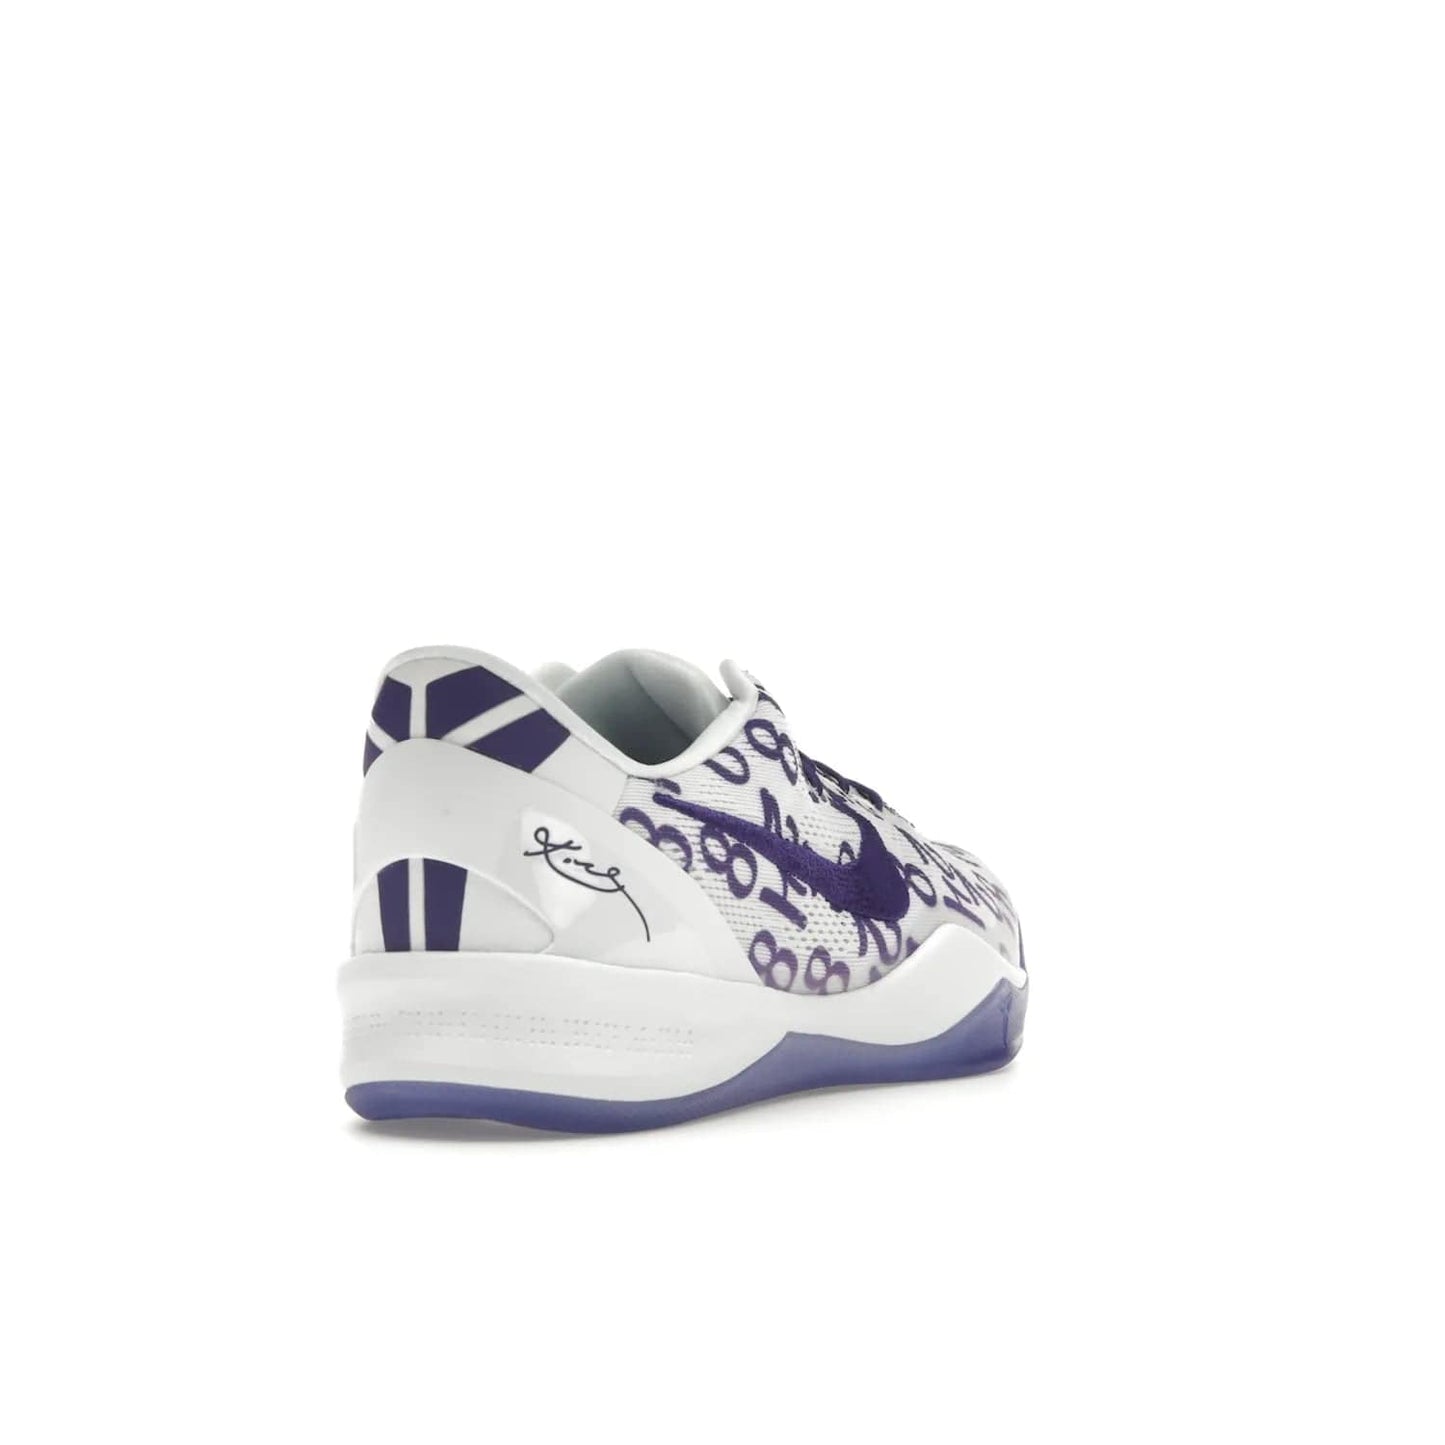 Nike Kobe 8 Protro Court Purple - Image 31 - Only at www.BallersClubKickz.com - 